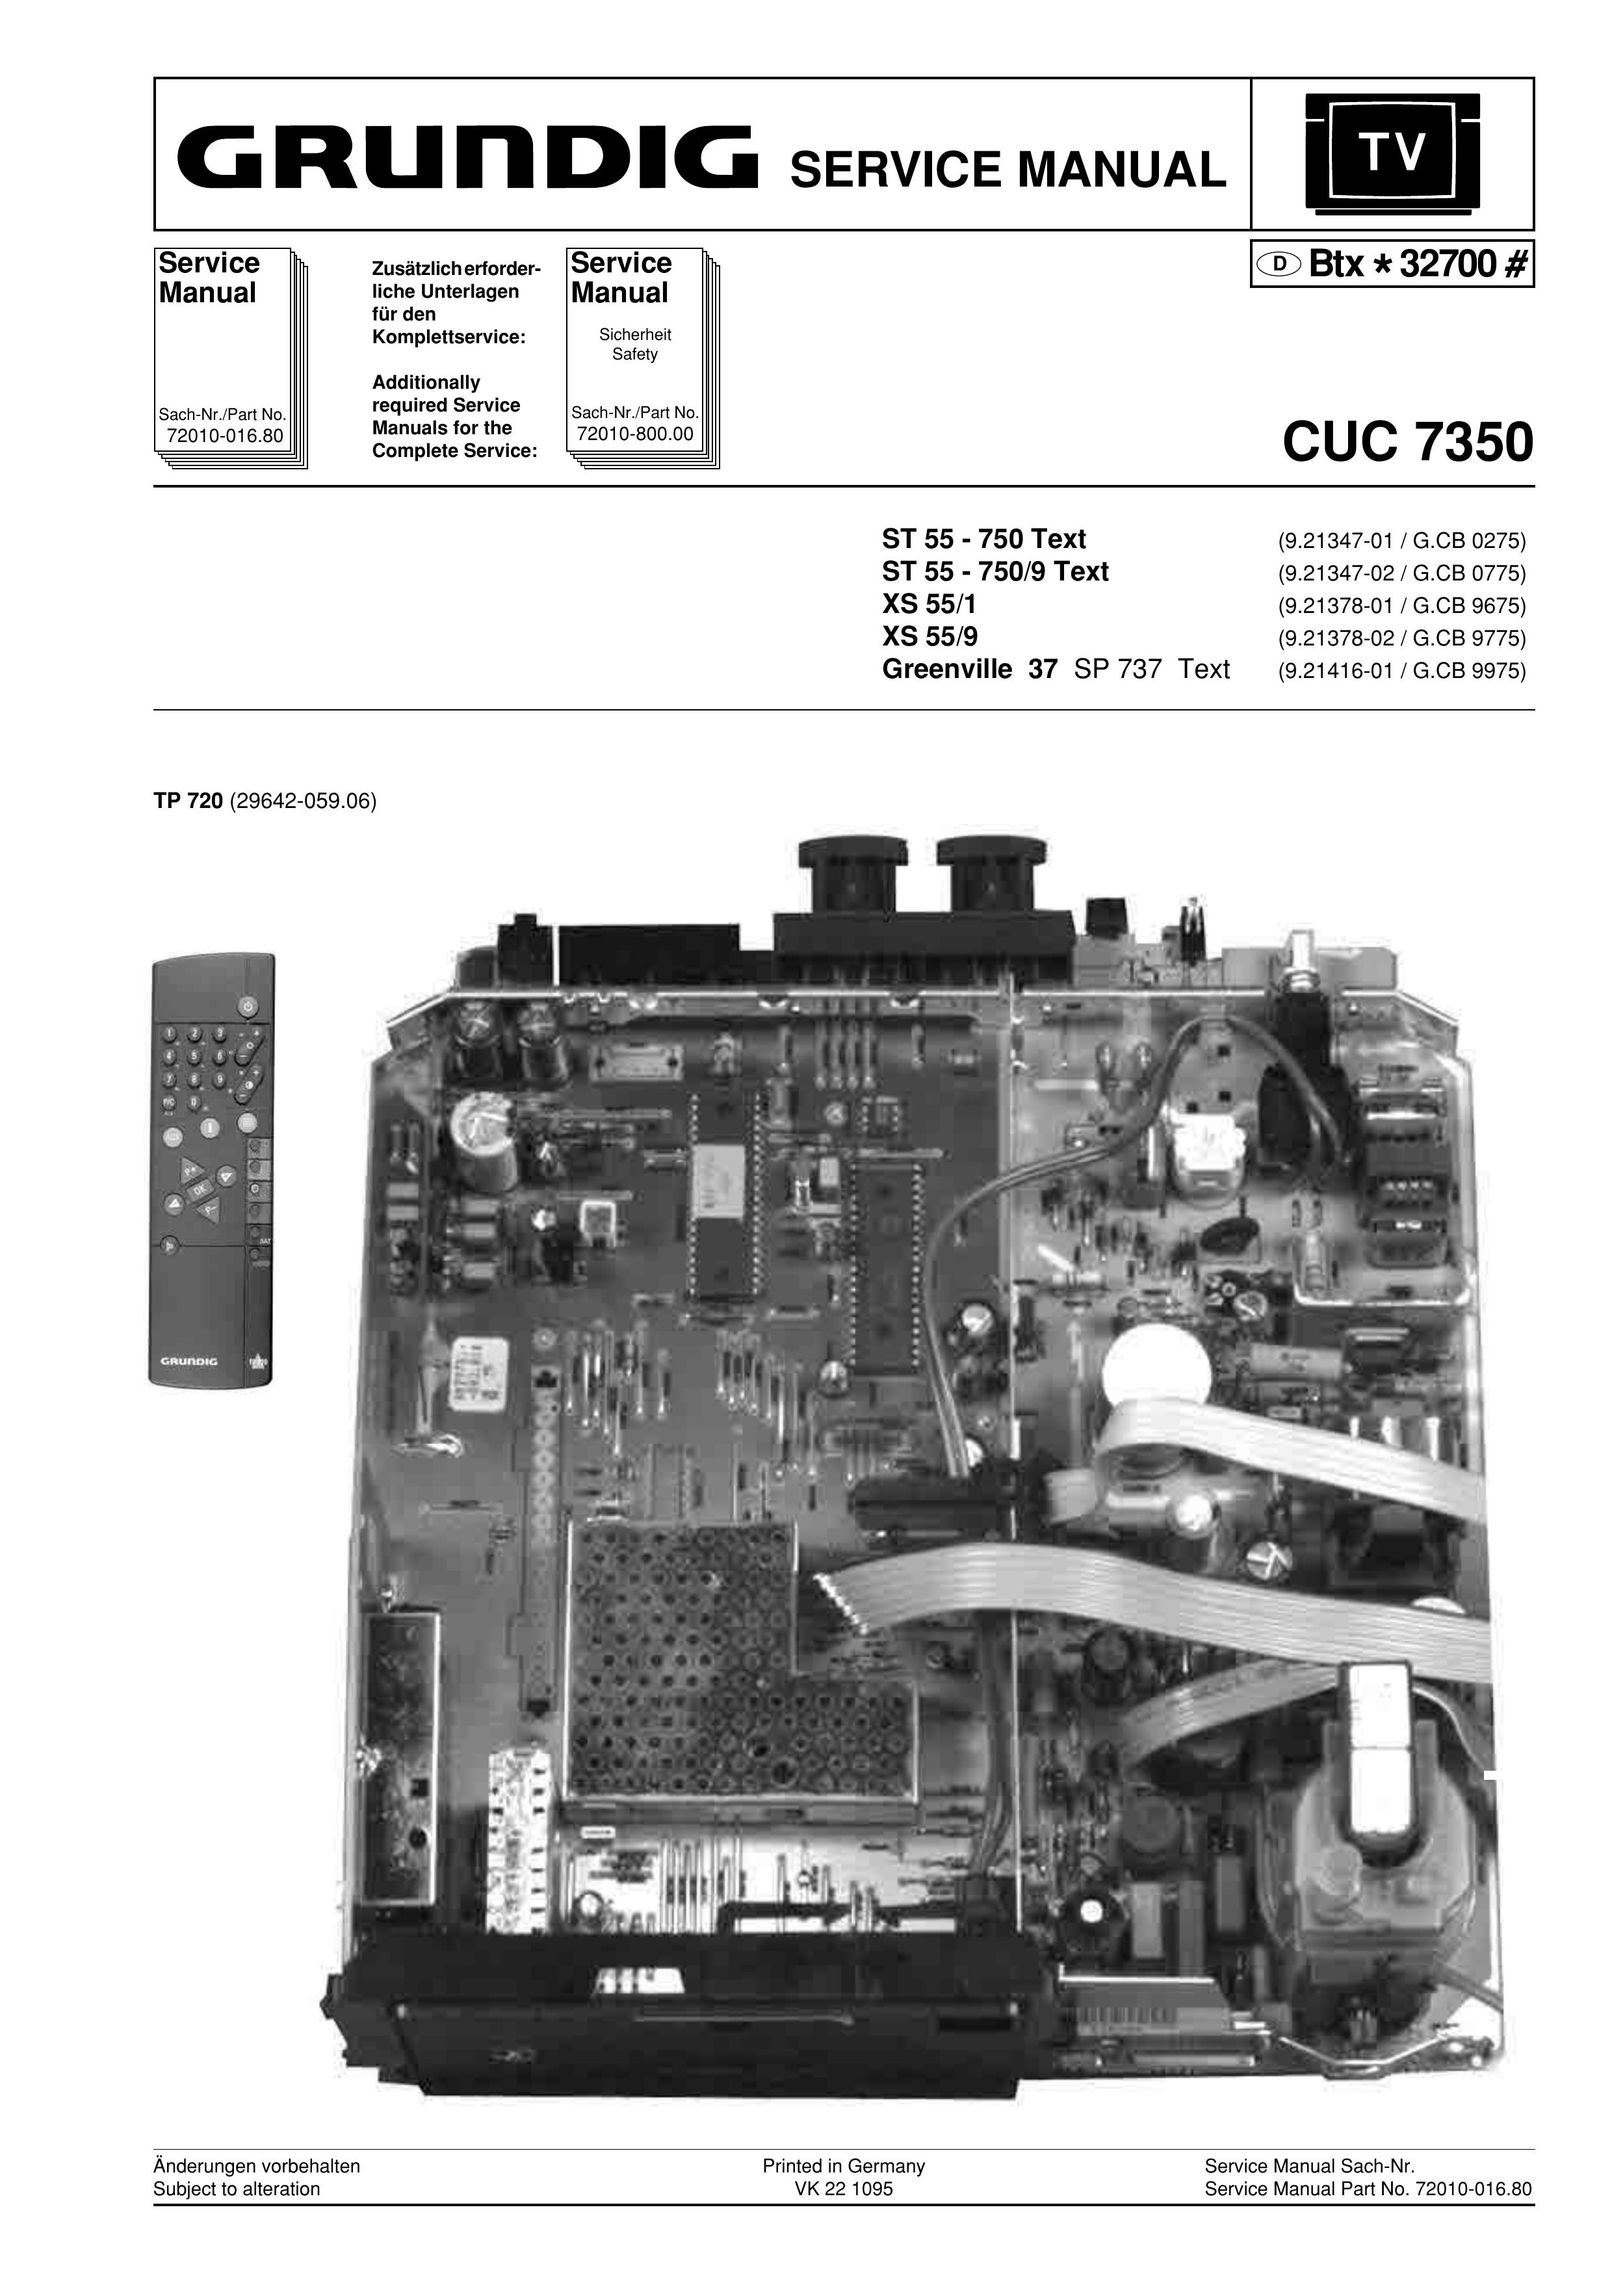 Grundig 72010-800.00 Network Card User Manual